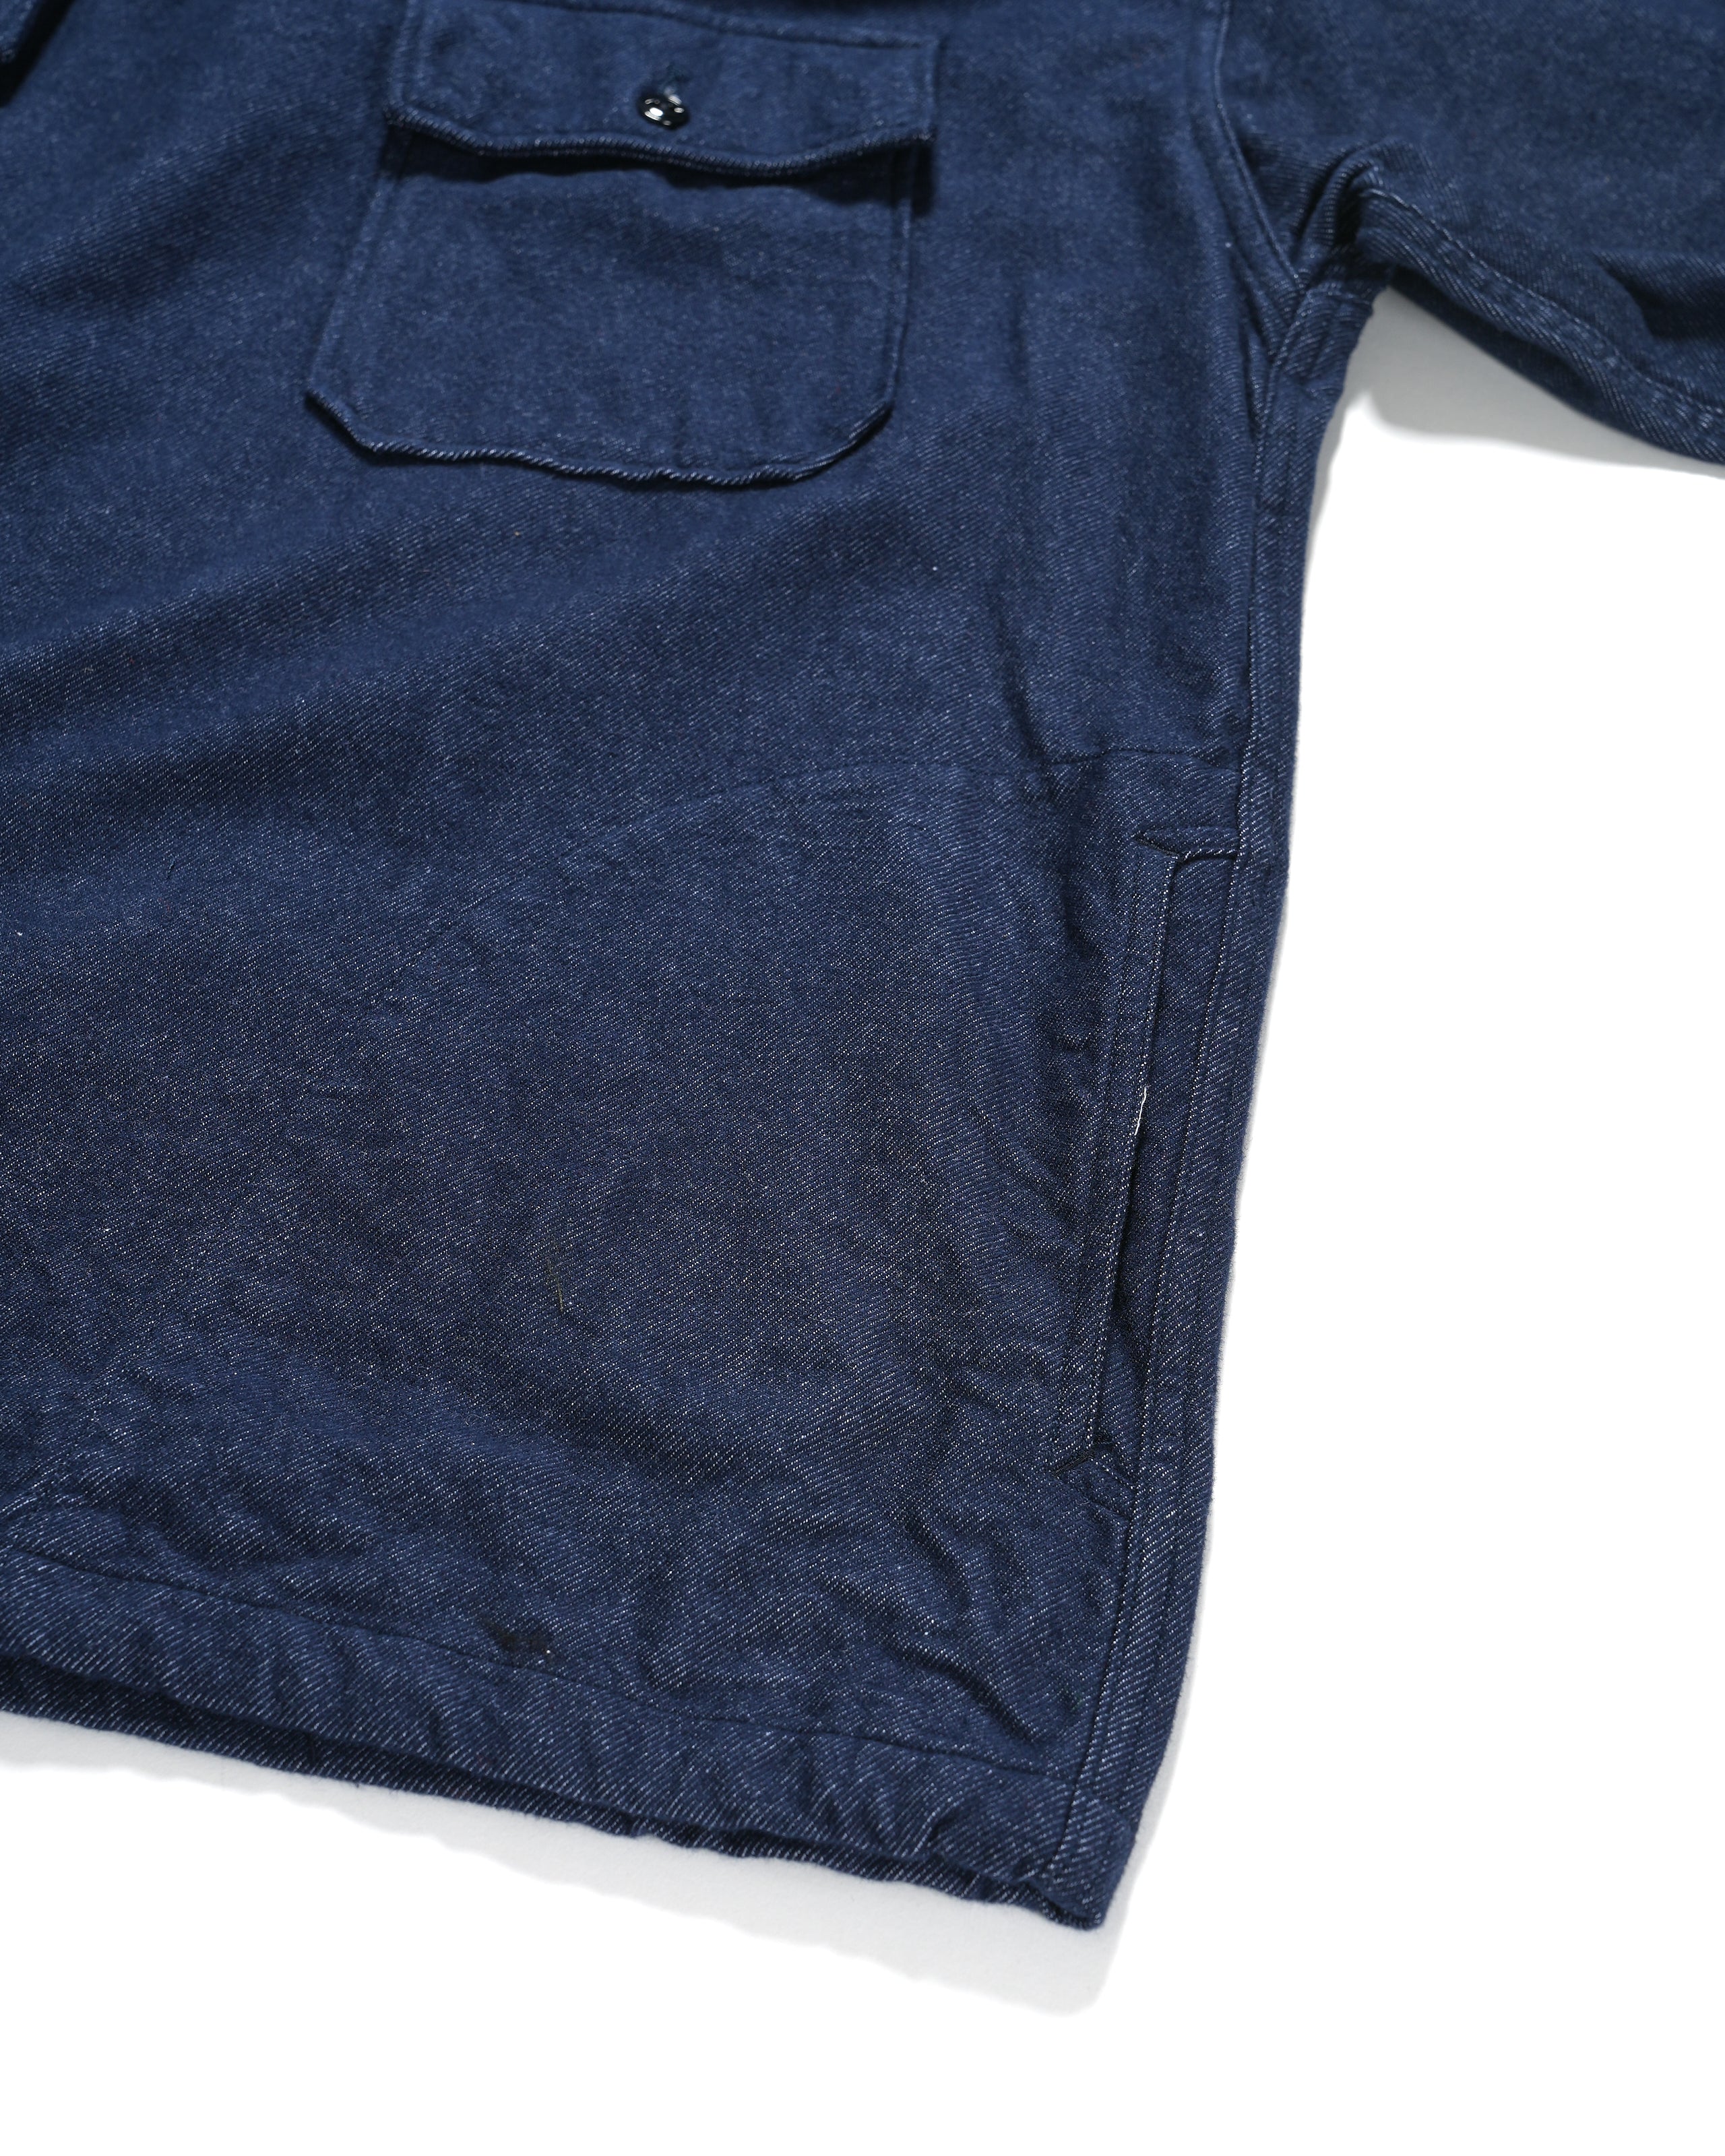 Cagoule Shirt - Indigo Cotton Denim Flannel